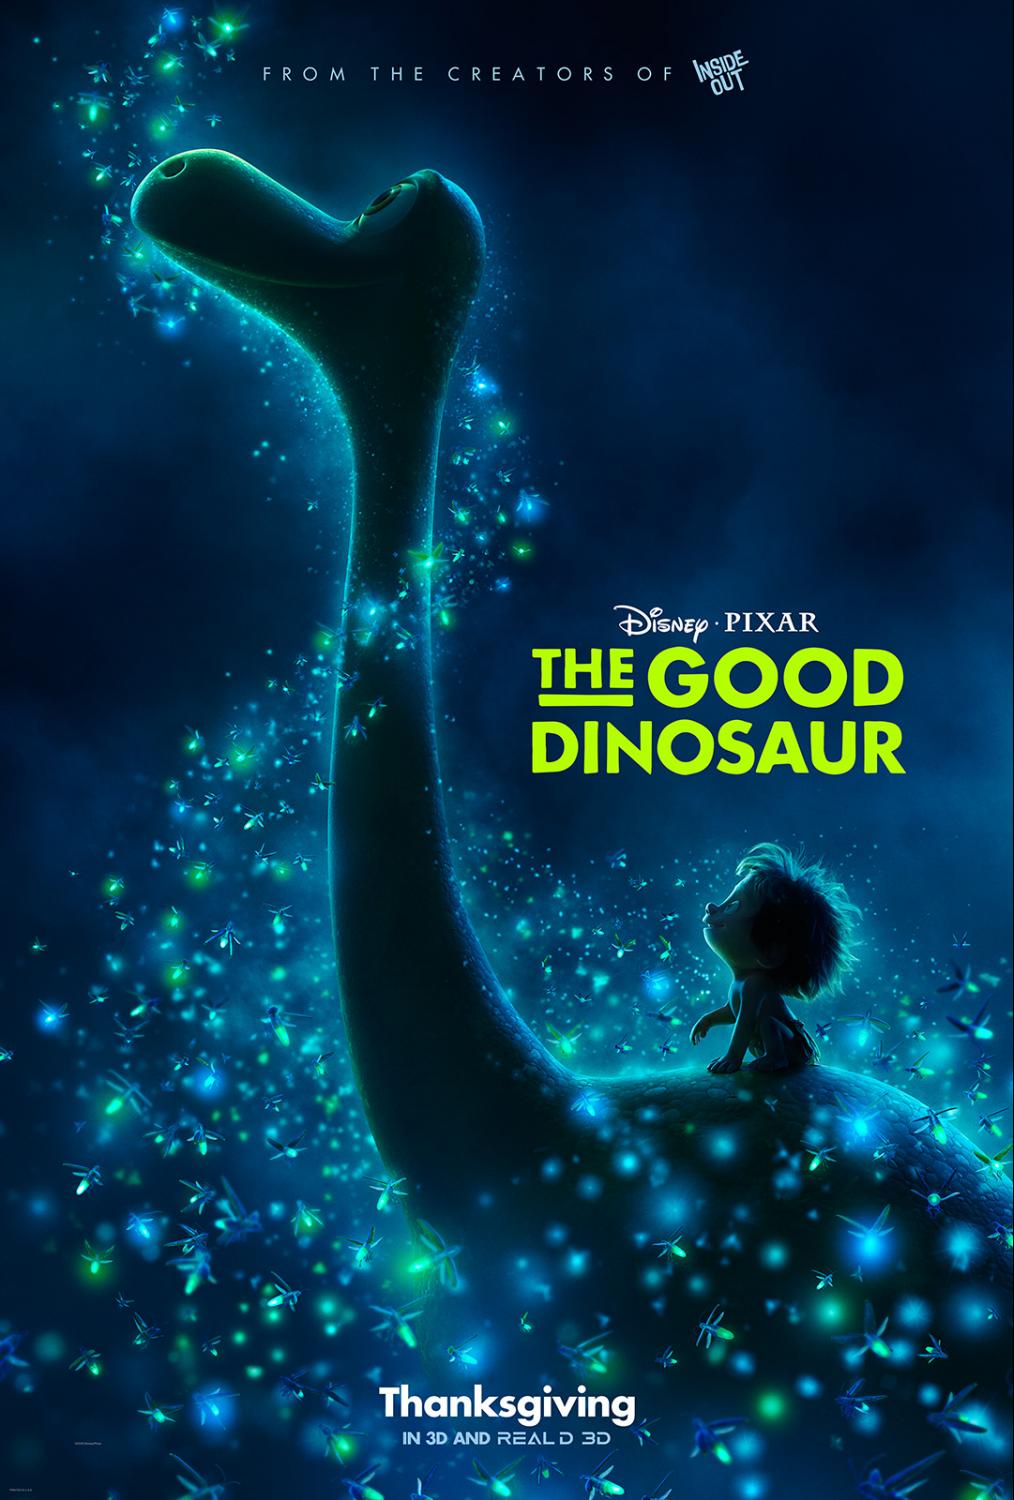 TheGoodDinosaur Poster